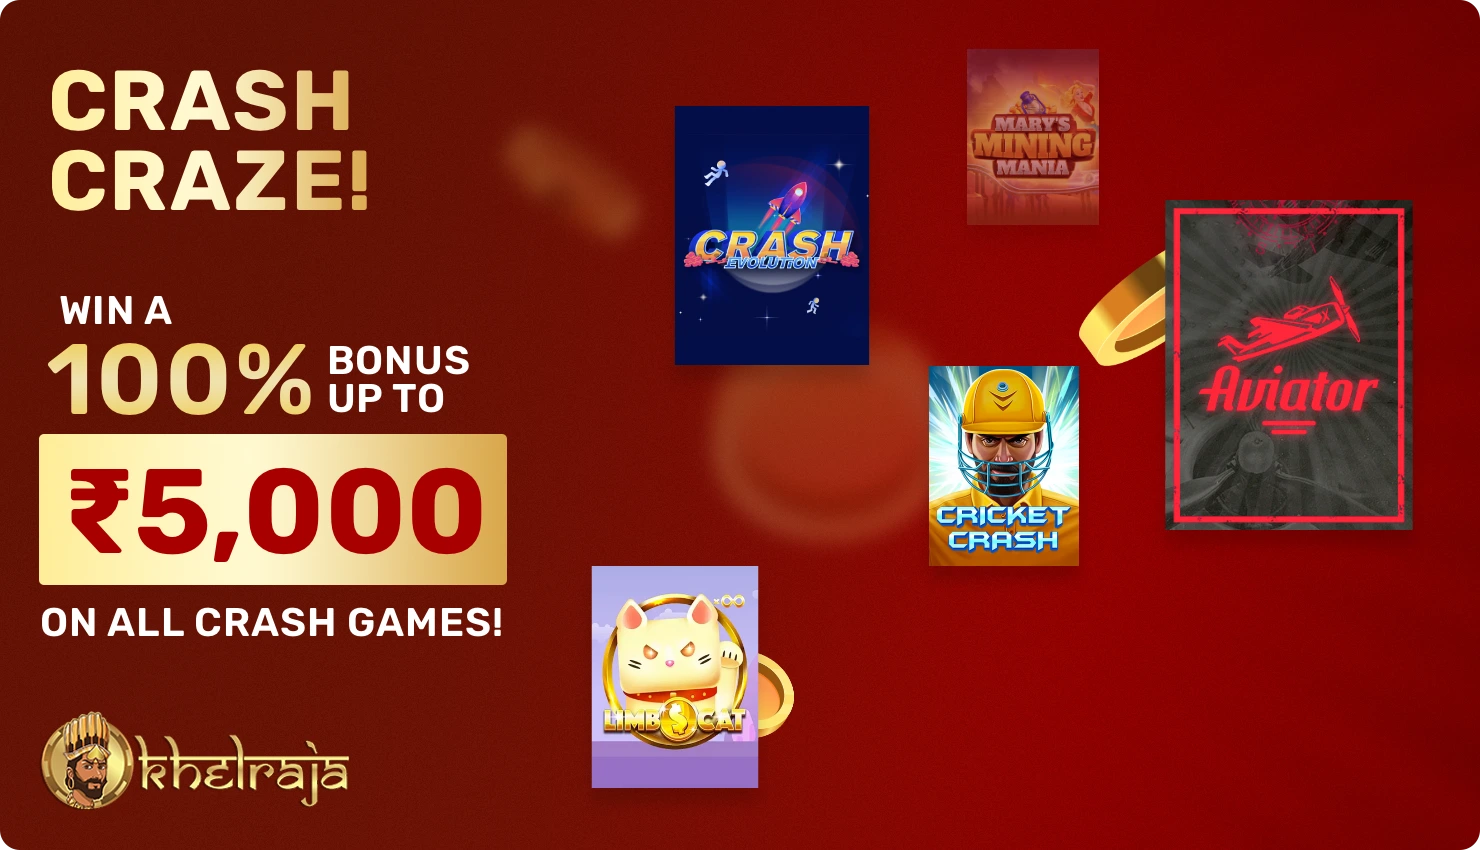 Khelraja's special Crash Craze bonus is for crash games at online casinos